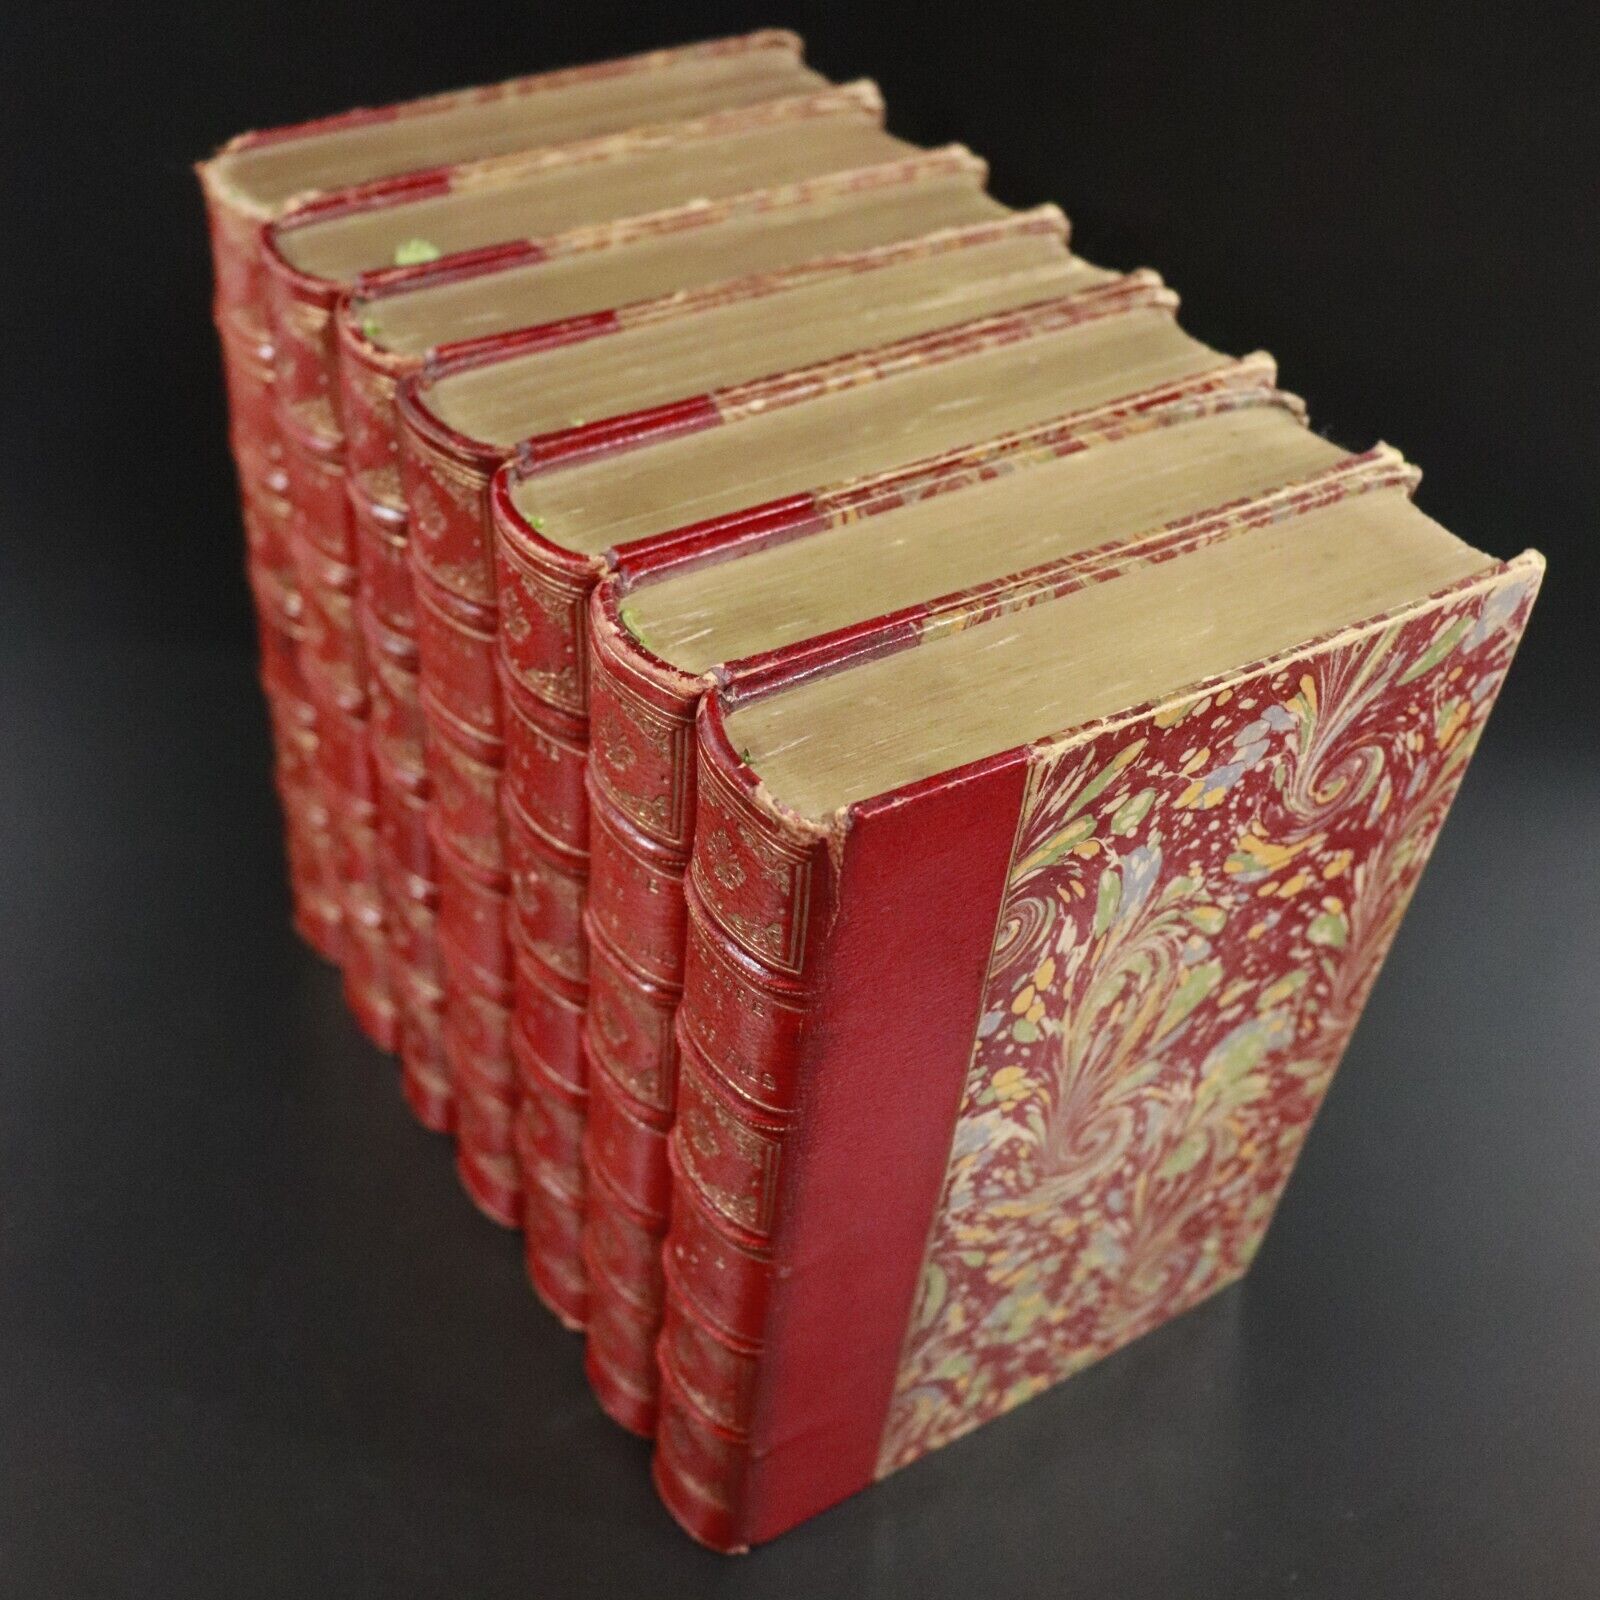 1896 7vol Alexandre Dumas Fils Theatre Complet Prefaces Inedites Antique Books - 0